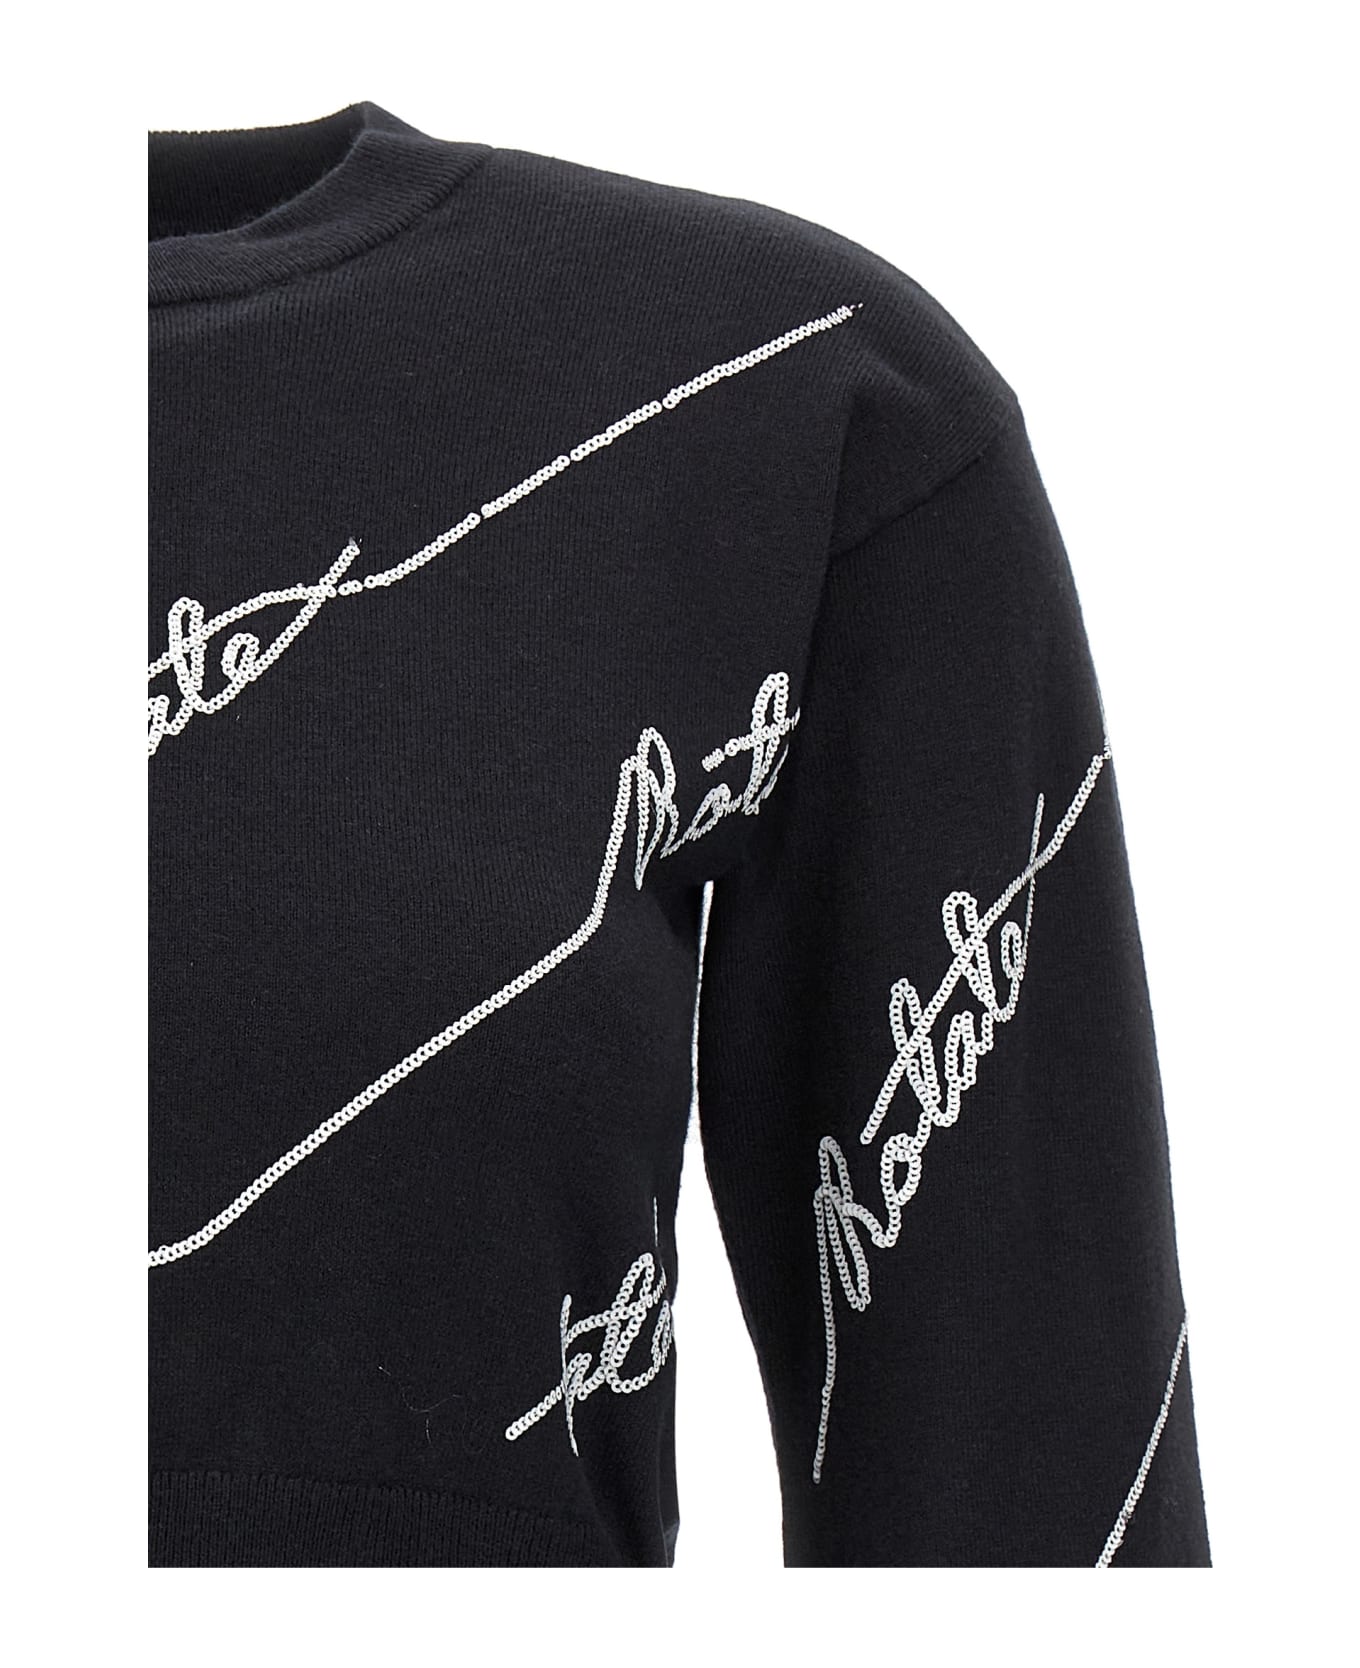 Rotate by Birger Christensen 'sequin Logo' Sweater - White/Black